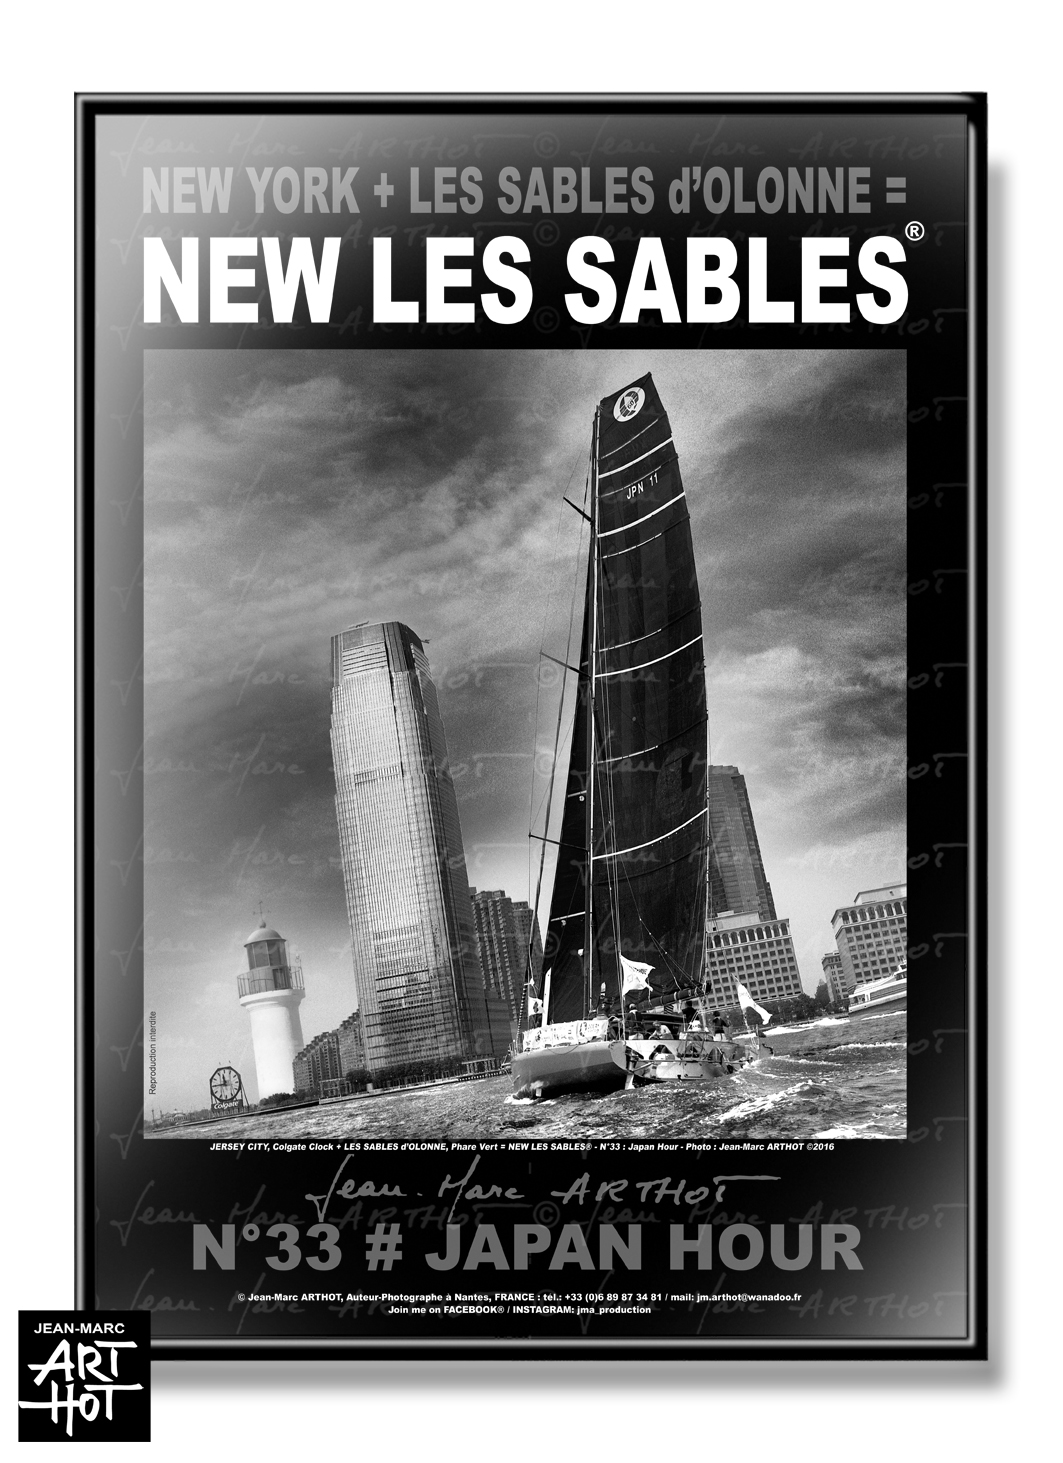 arthot-photo-art-b&w-new-york-vendee-sables-olonne-newlessables-033-voilier-japon-jersey-AFFICHE